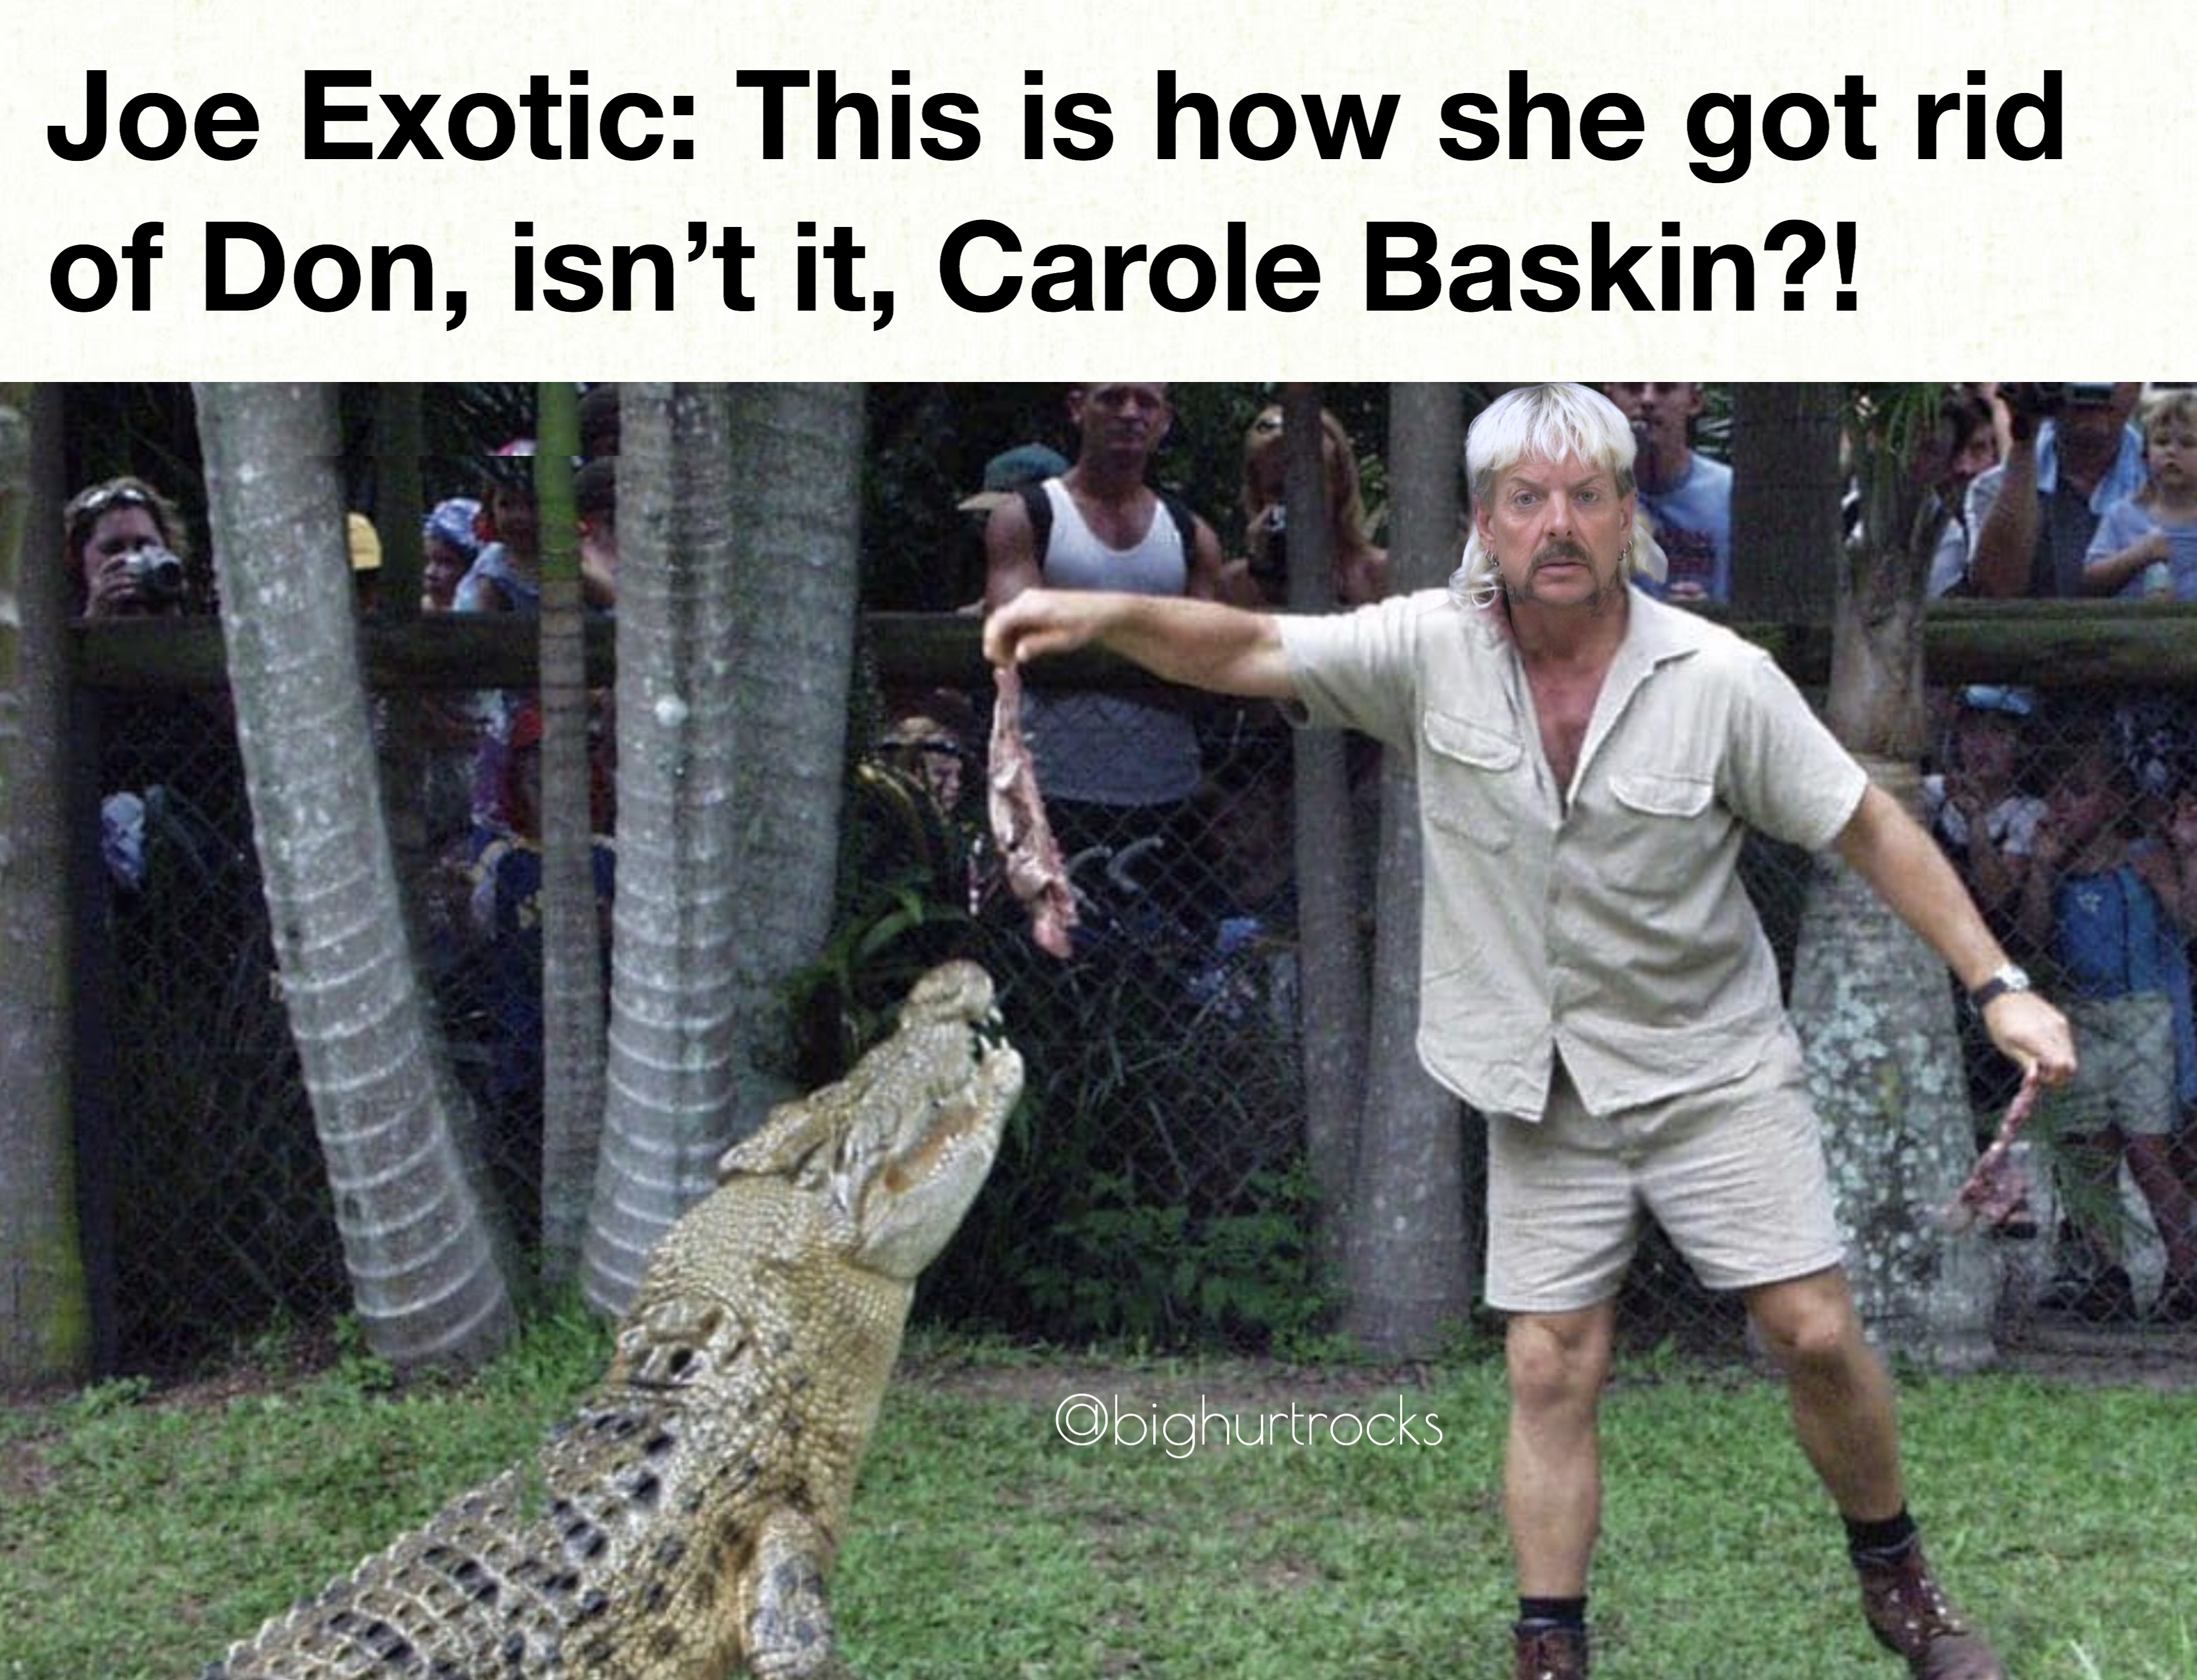 steve irwin crocodile feeding - Joe Exotic This is how she got rid of Don, isn't it, Carole Baskin?! Olighurtrocks